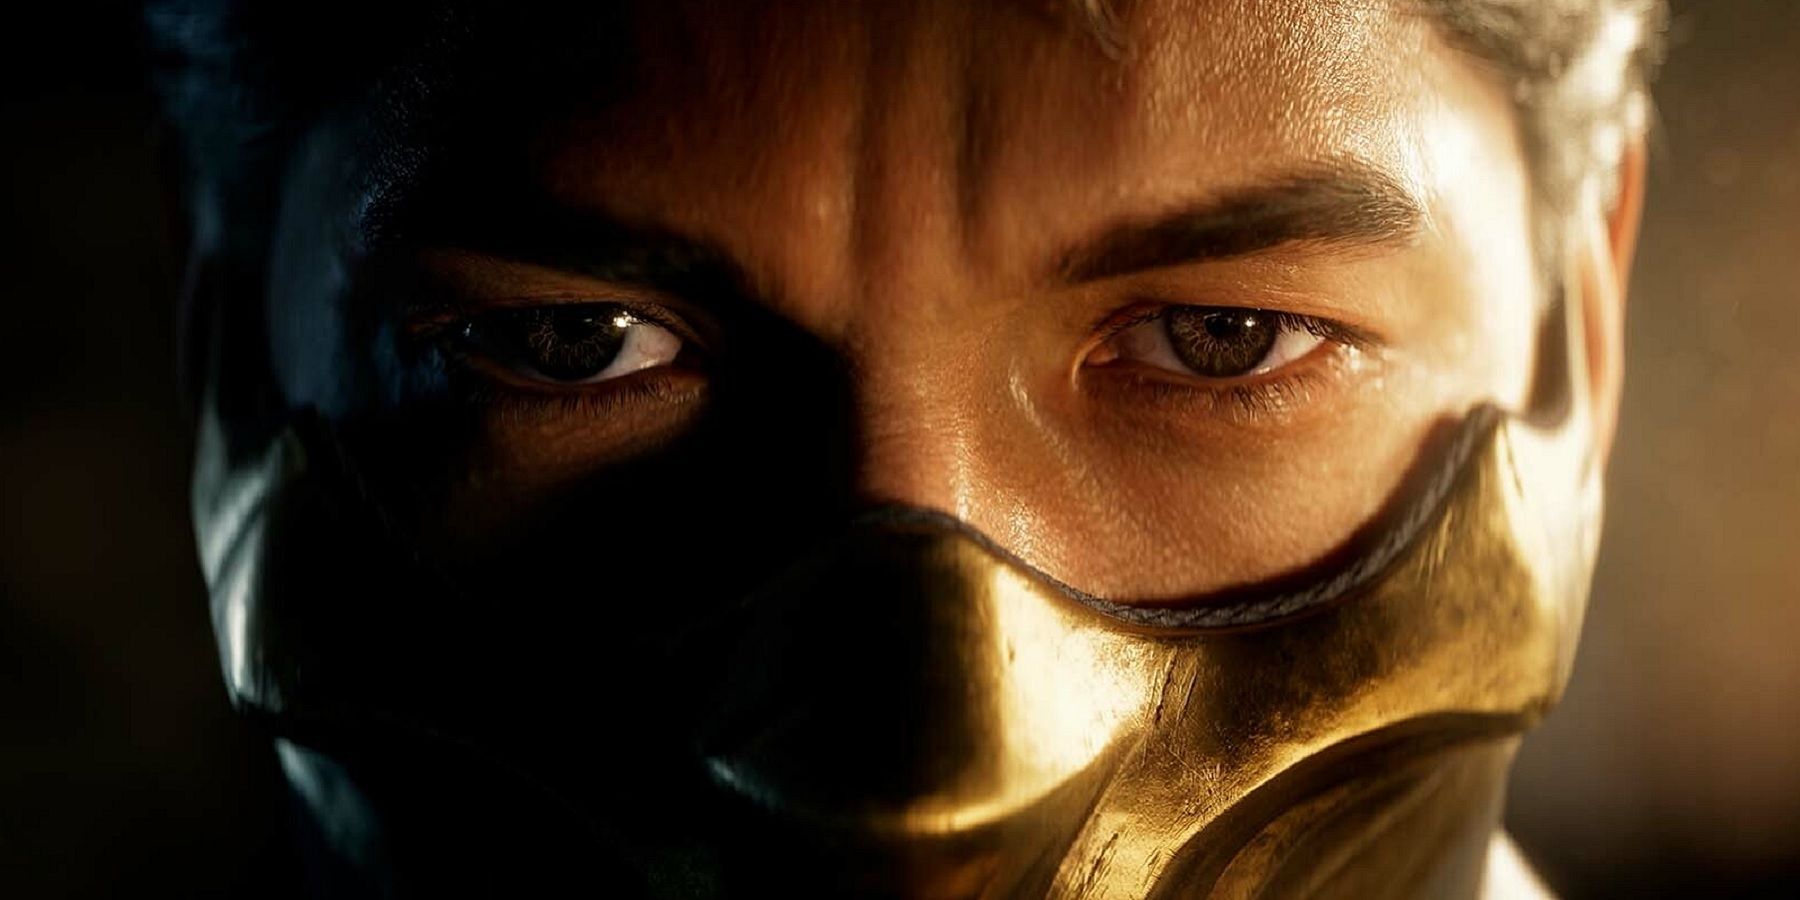 Peacemaker Included In Mortal Kombat 1 DLC Leak